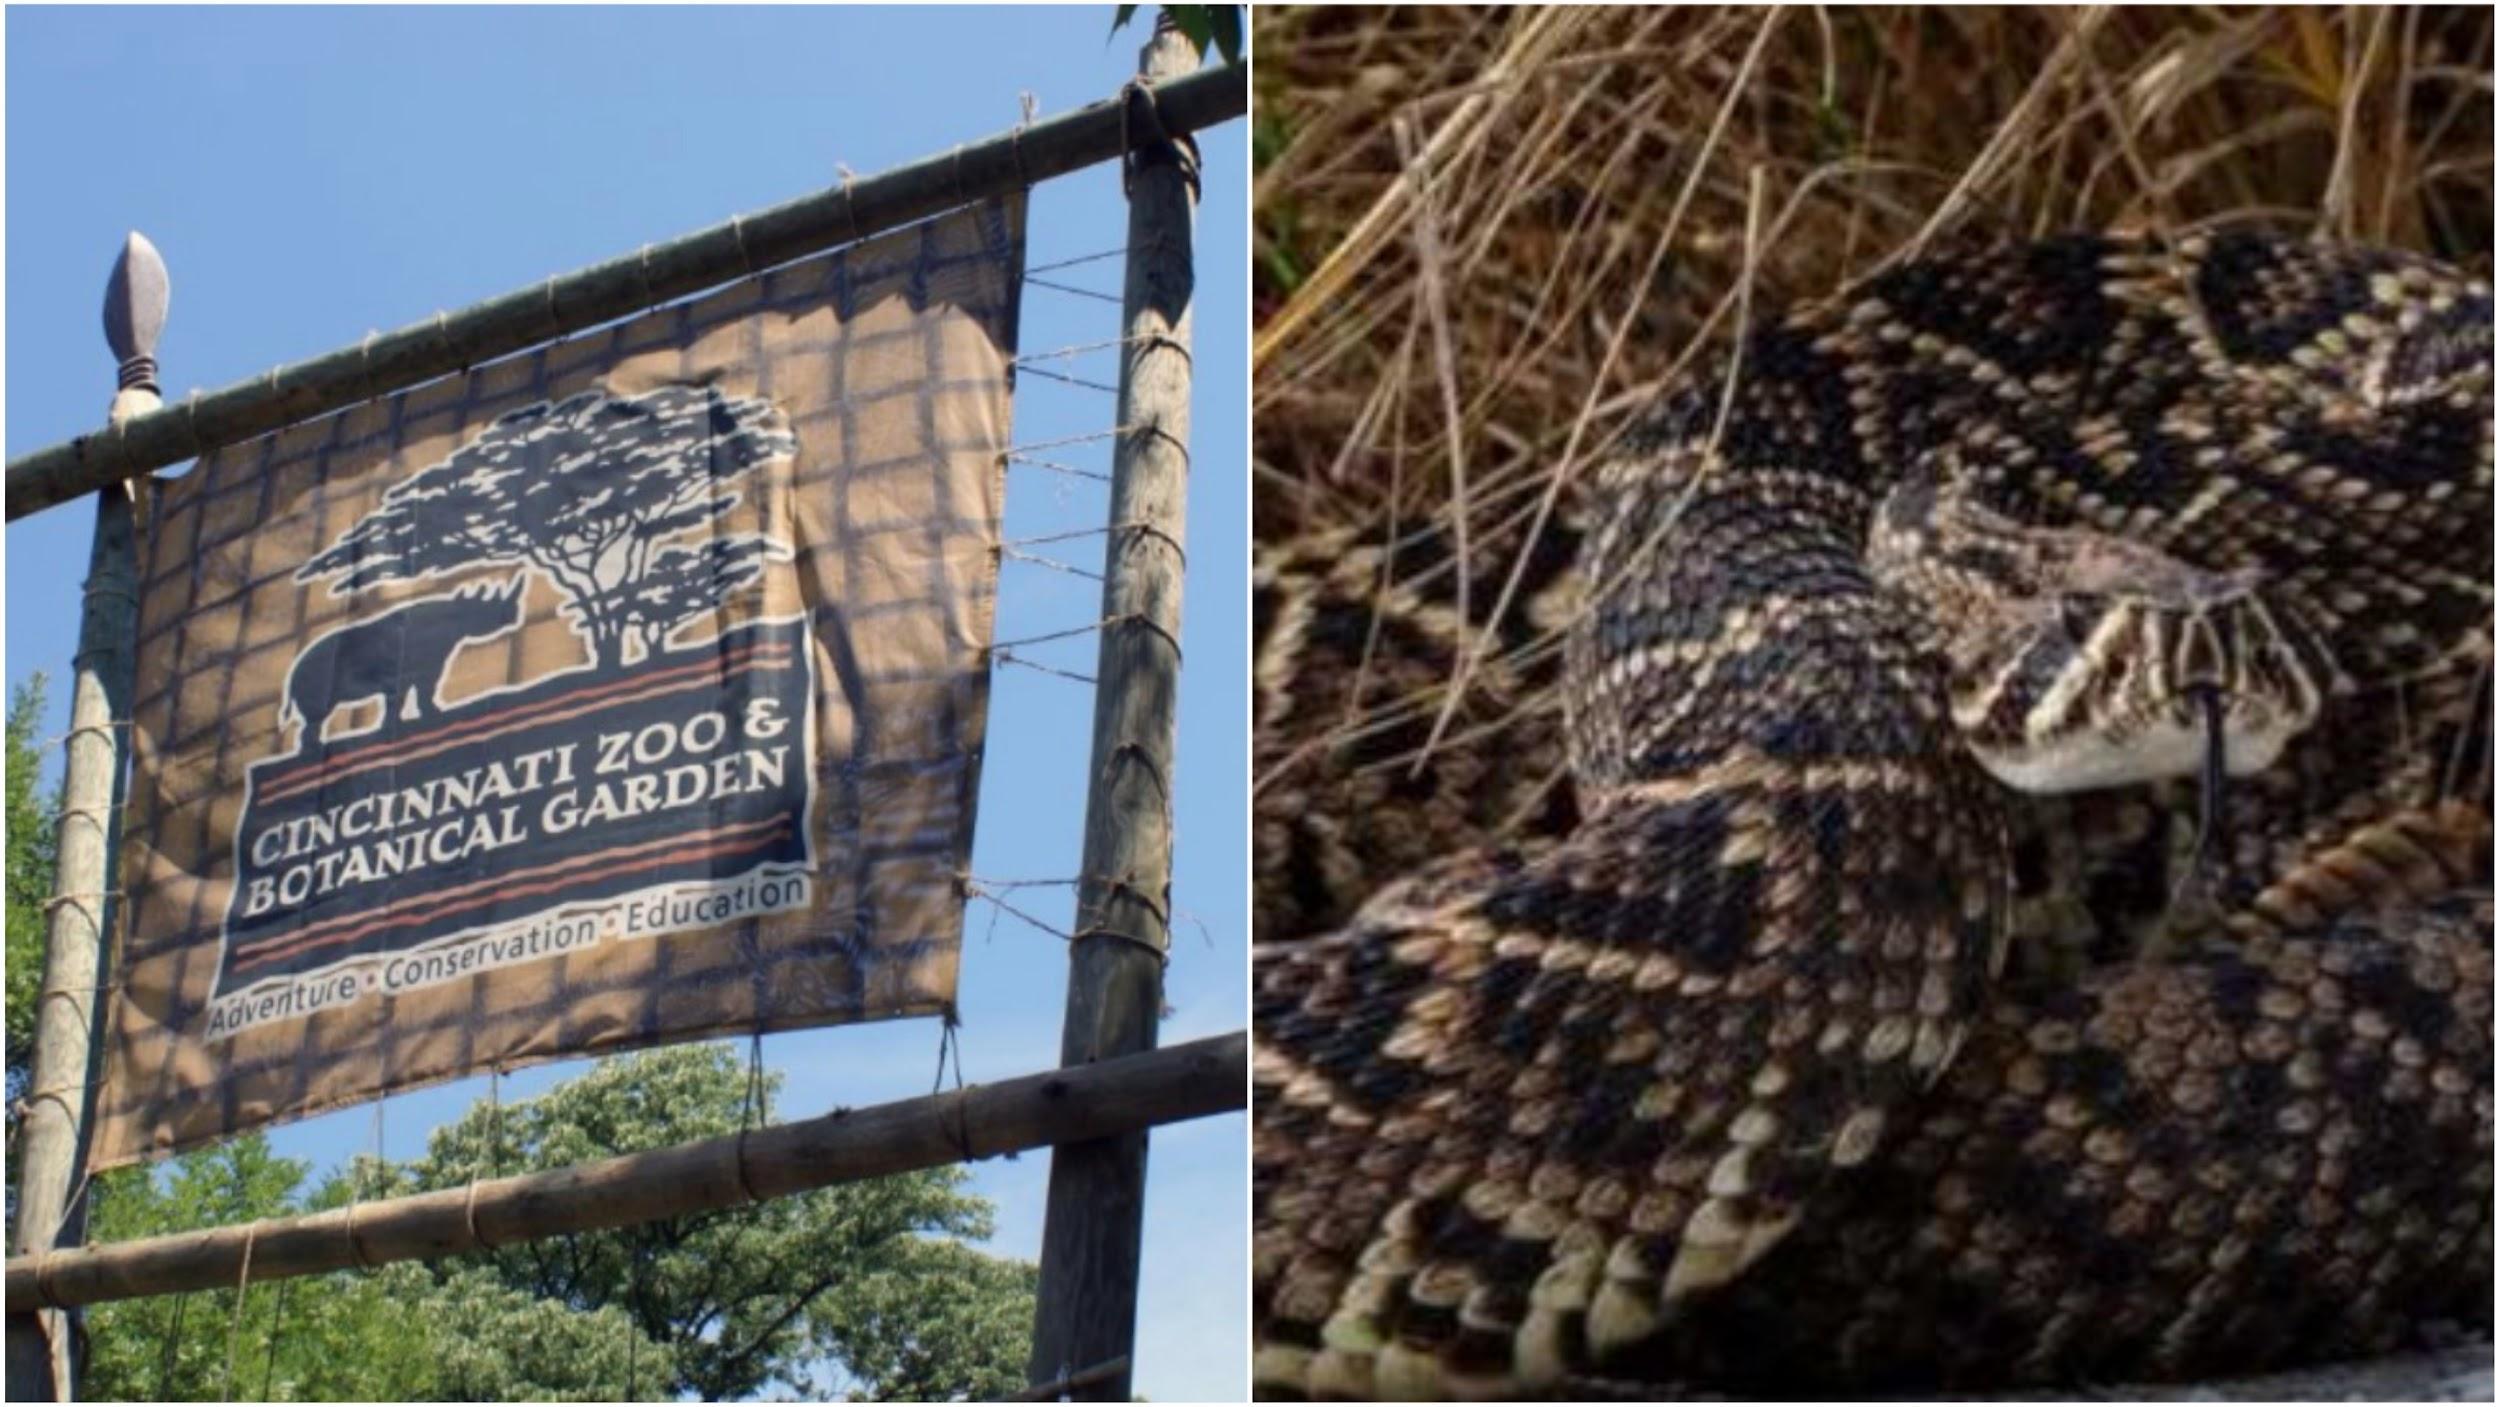 Cincinnati Zoo & Botanical Garden in Ohio and eastern diamondback rattlesnake, the world's most venomous snake